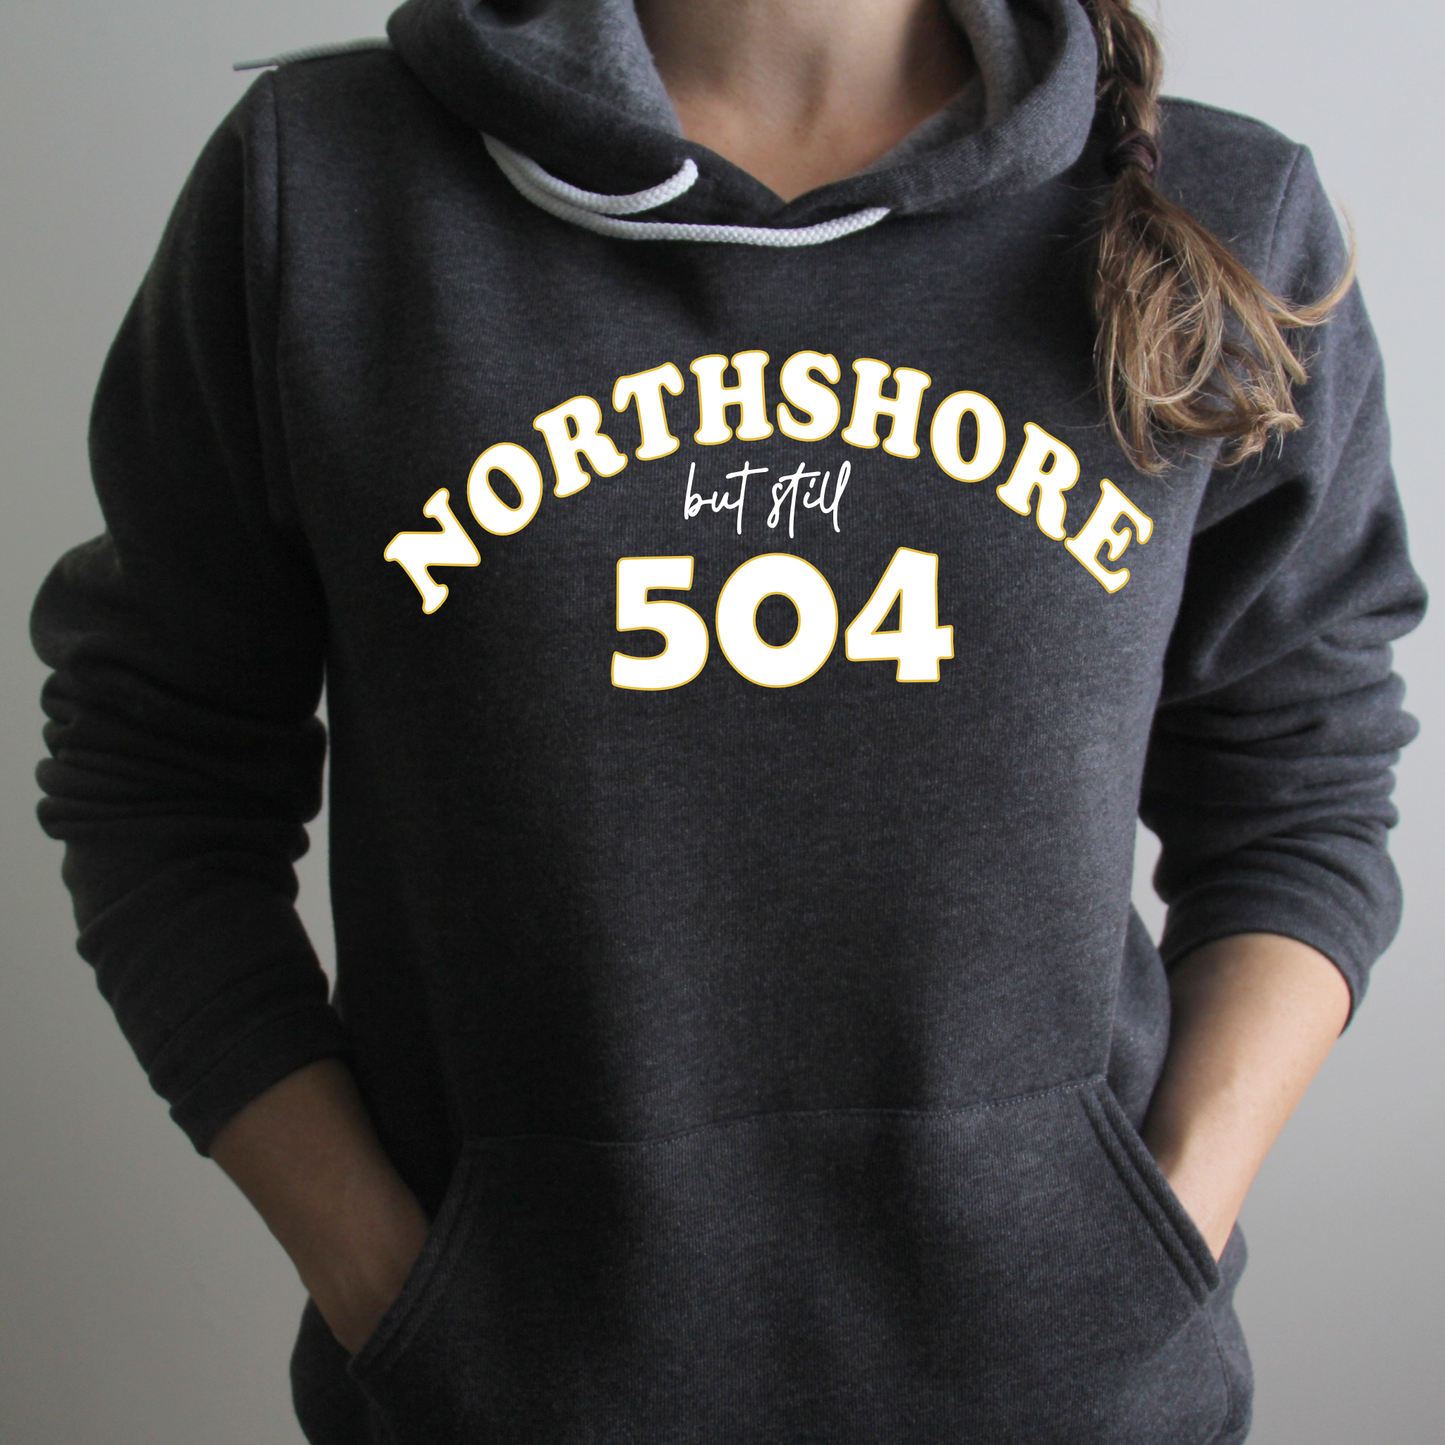 Northshore but still 504 Area Code - Hoodie